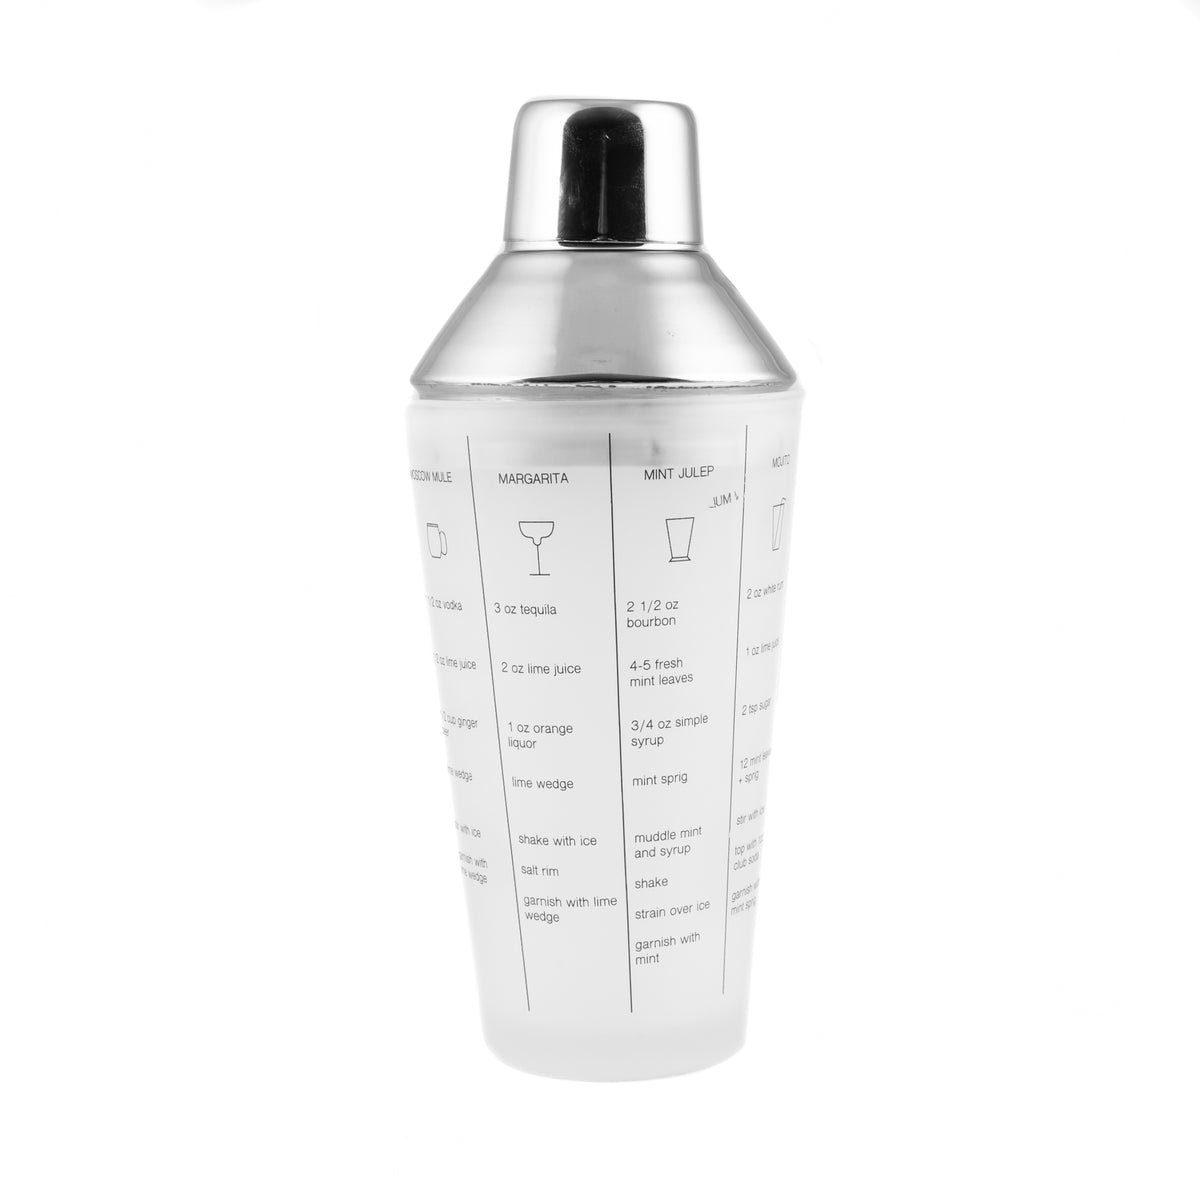 Glass Shaker Large, Glass Water Bottle